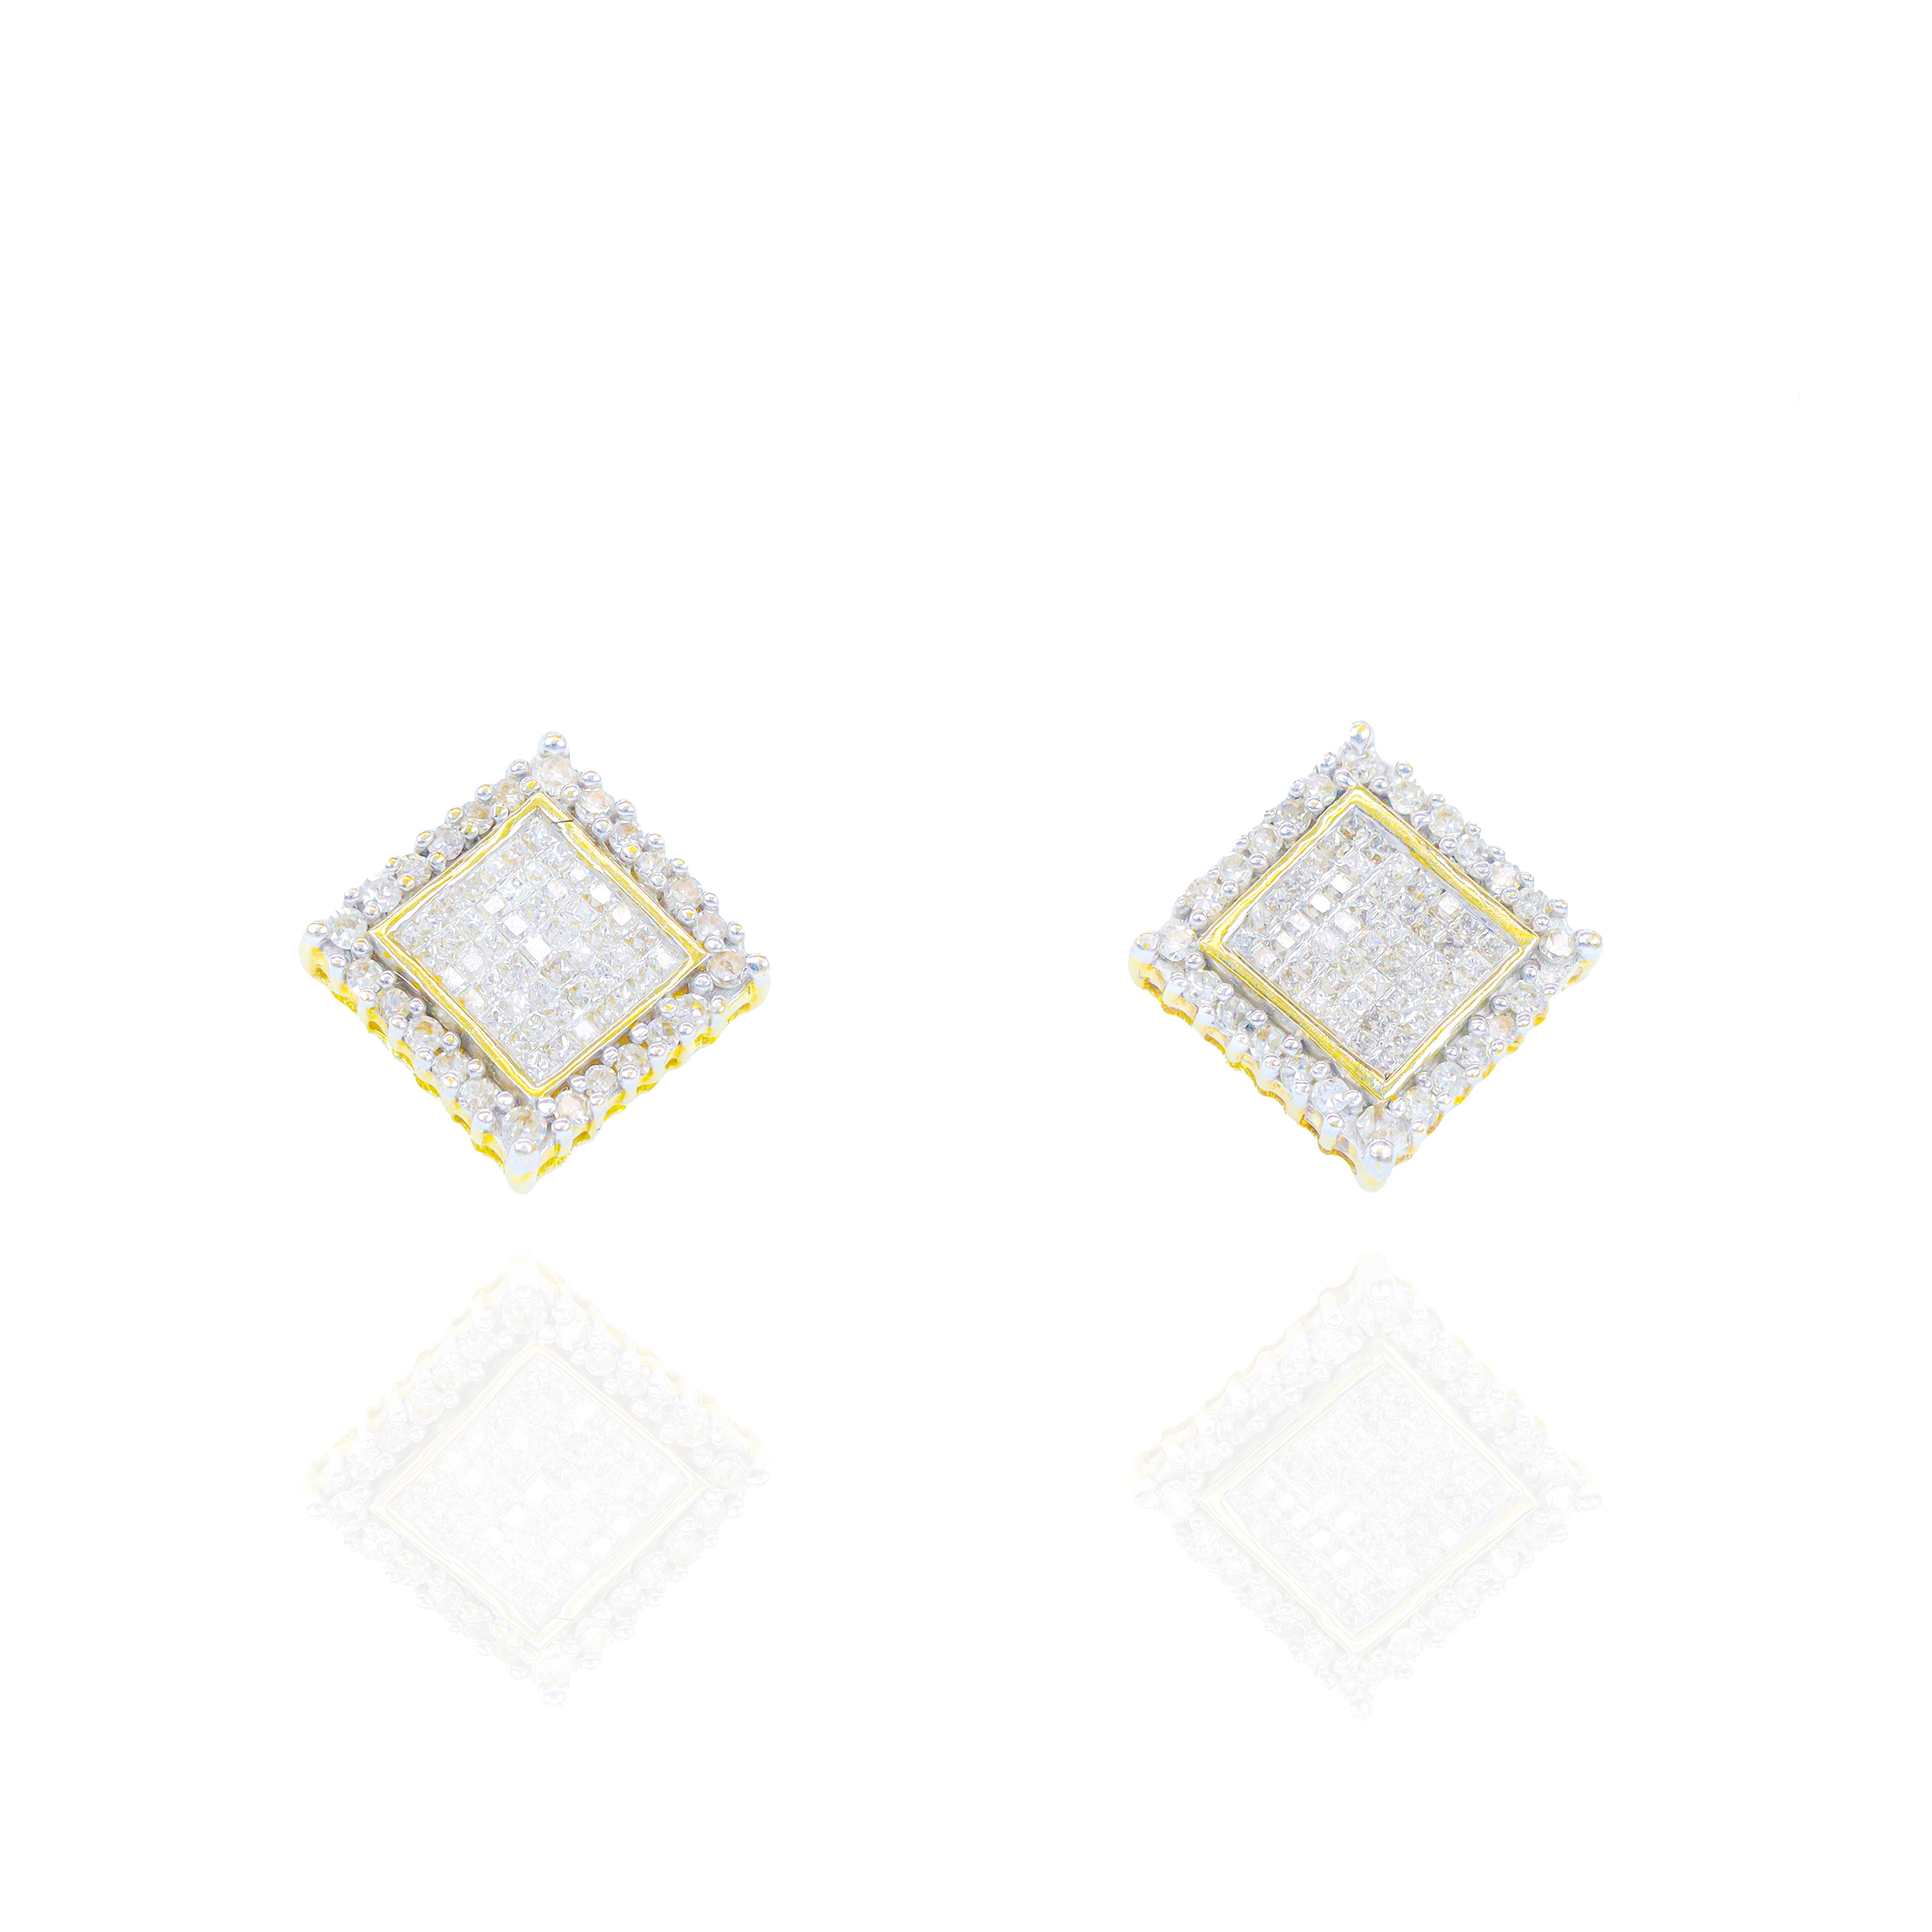 Square Princess Cut Diamond Cluster Earrings